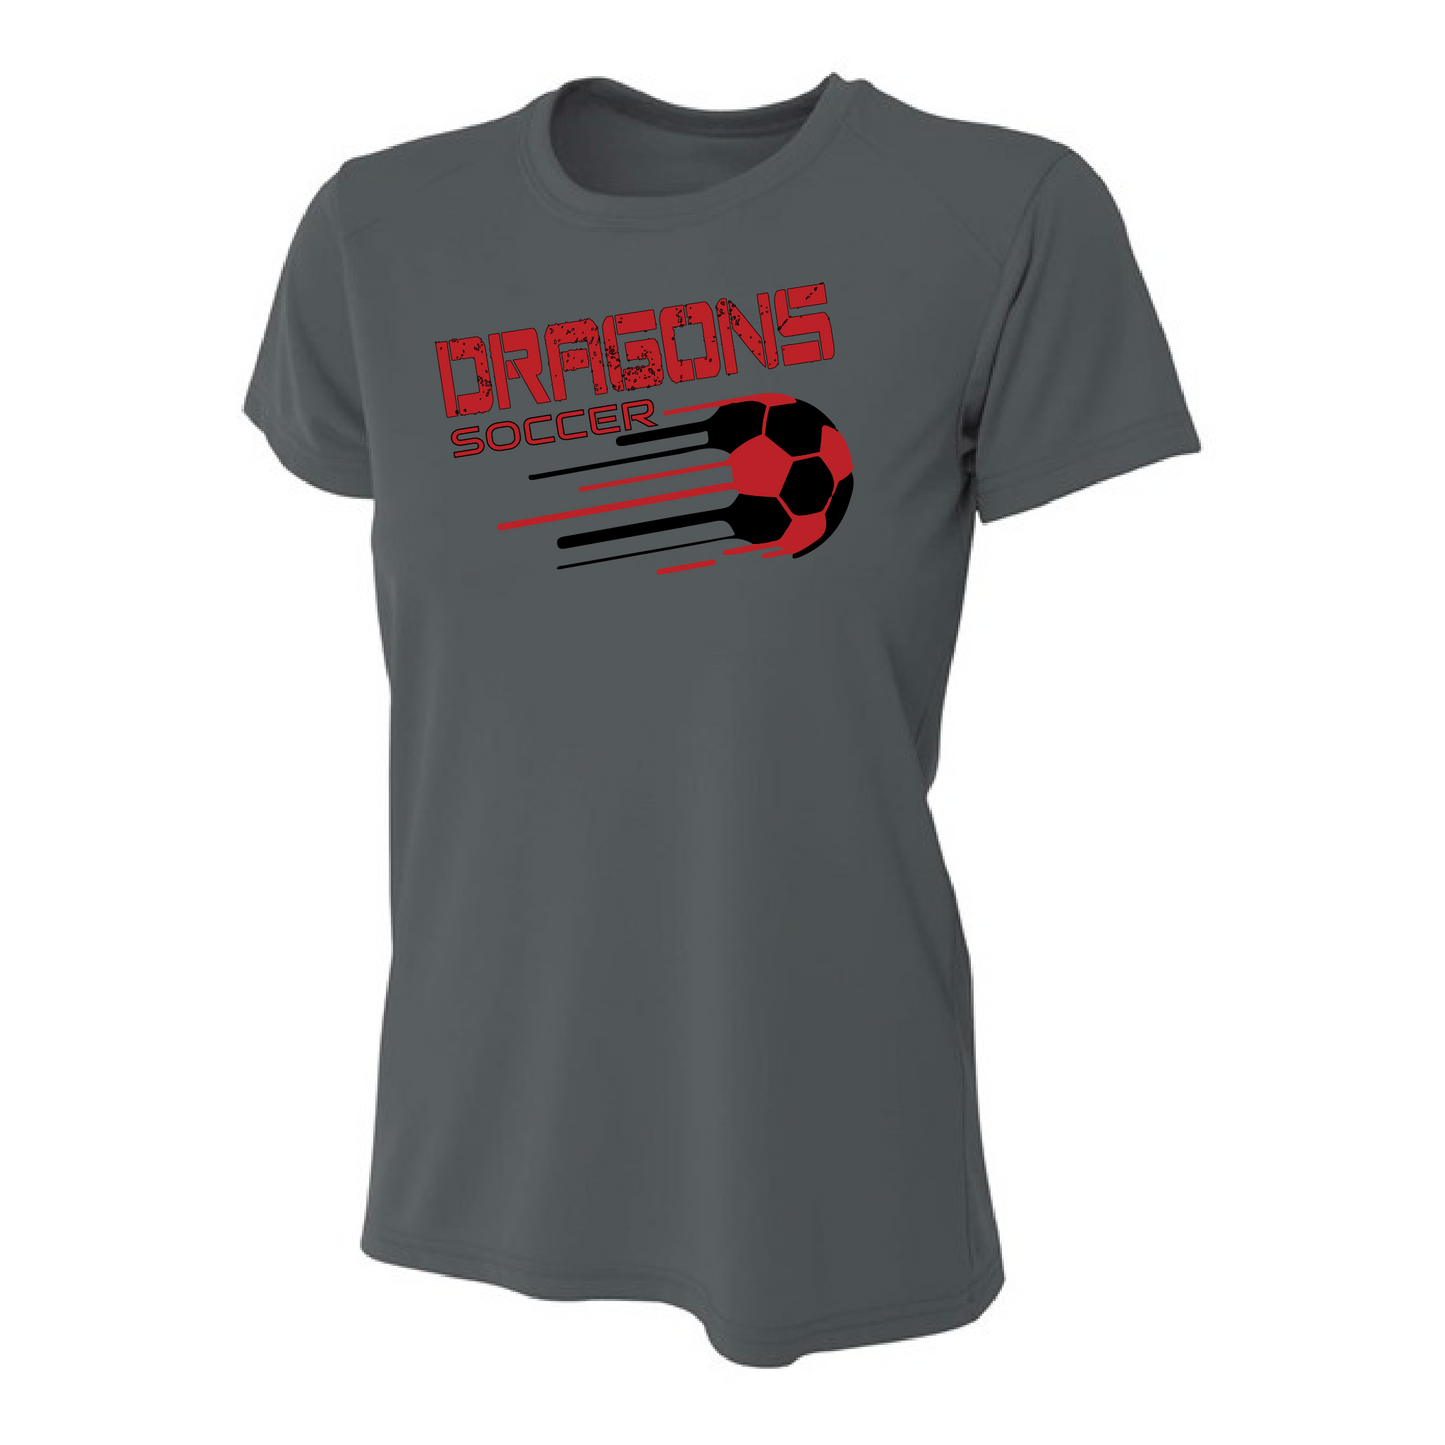 Womens S/S T-Shirt - Dragon Soccer Slanted